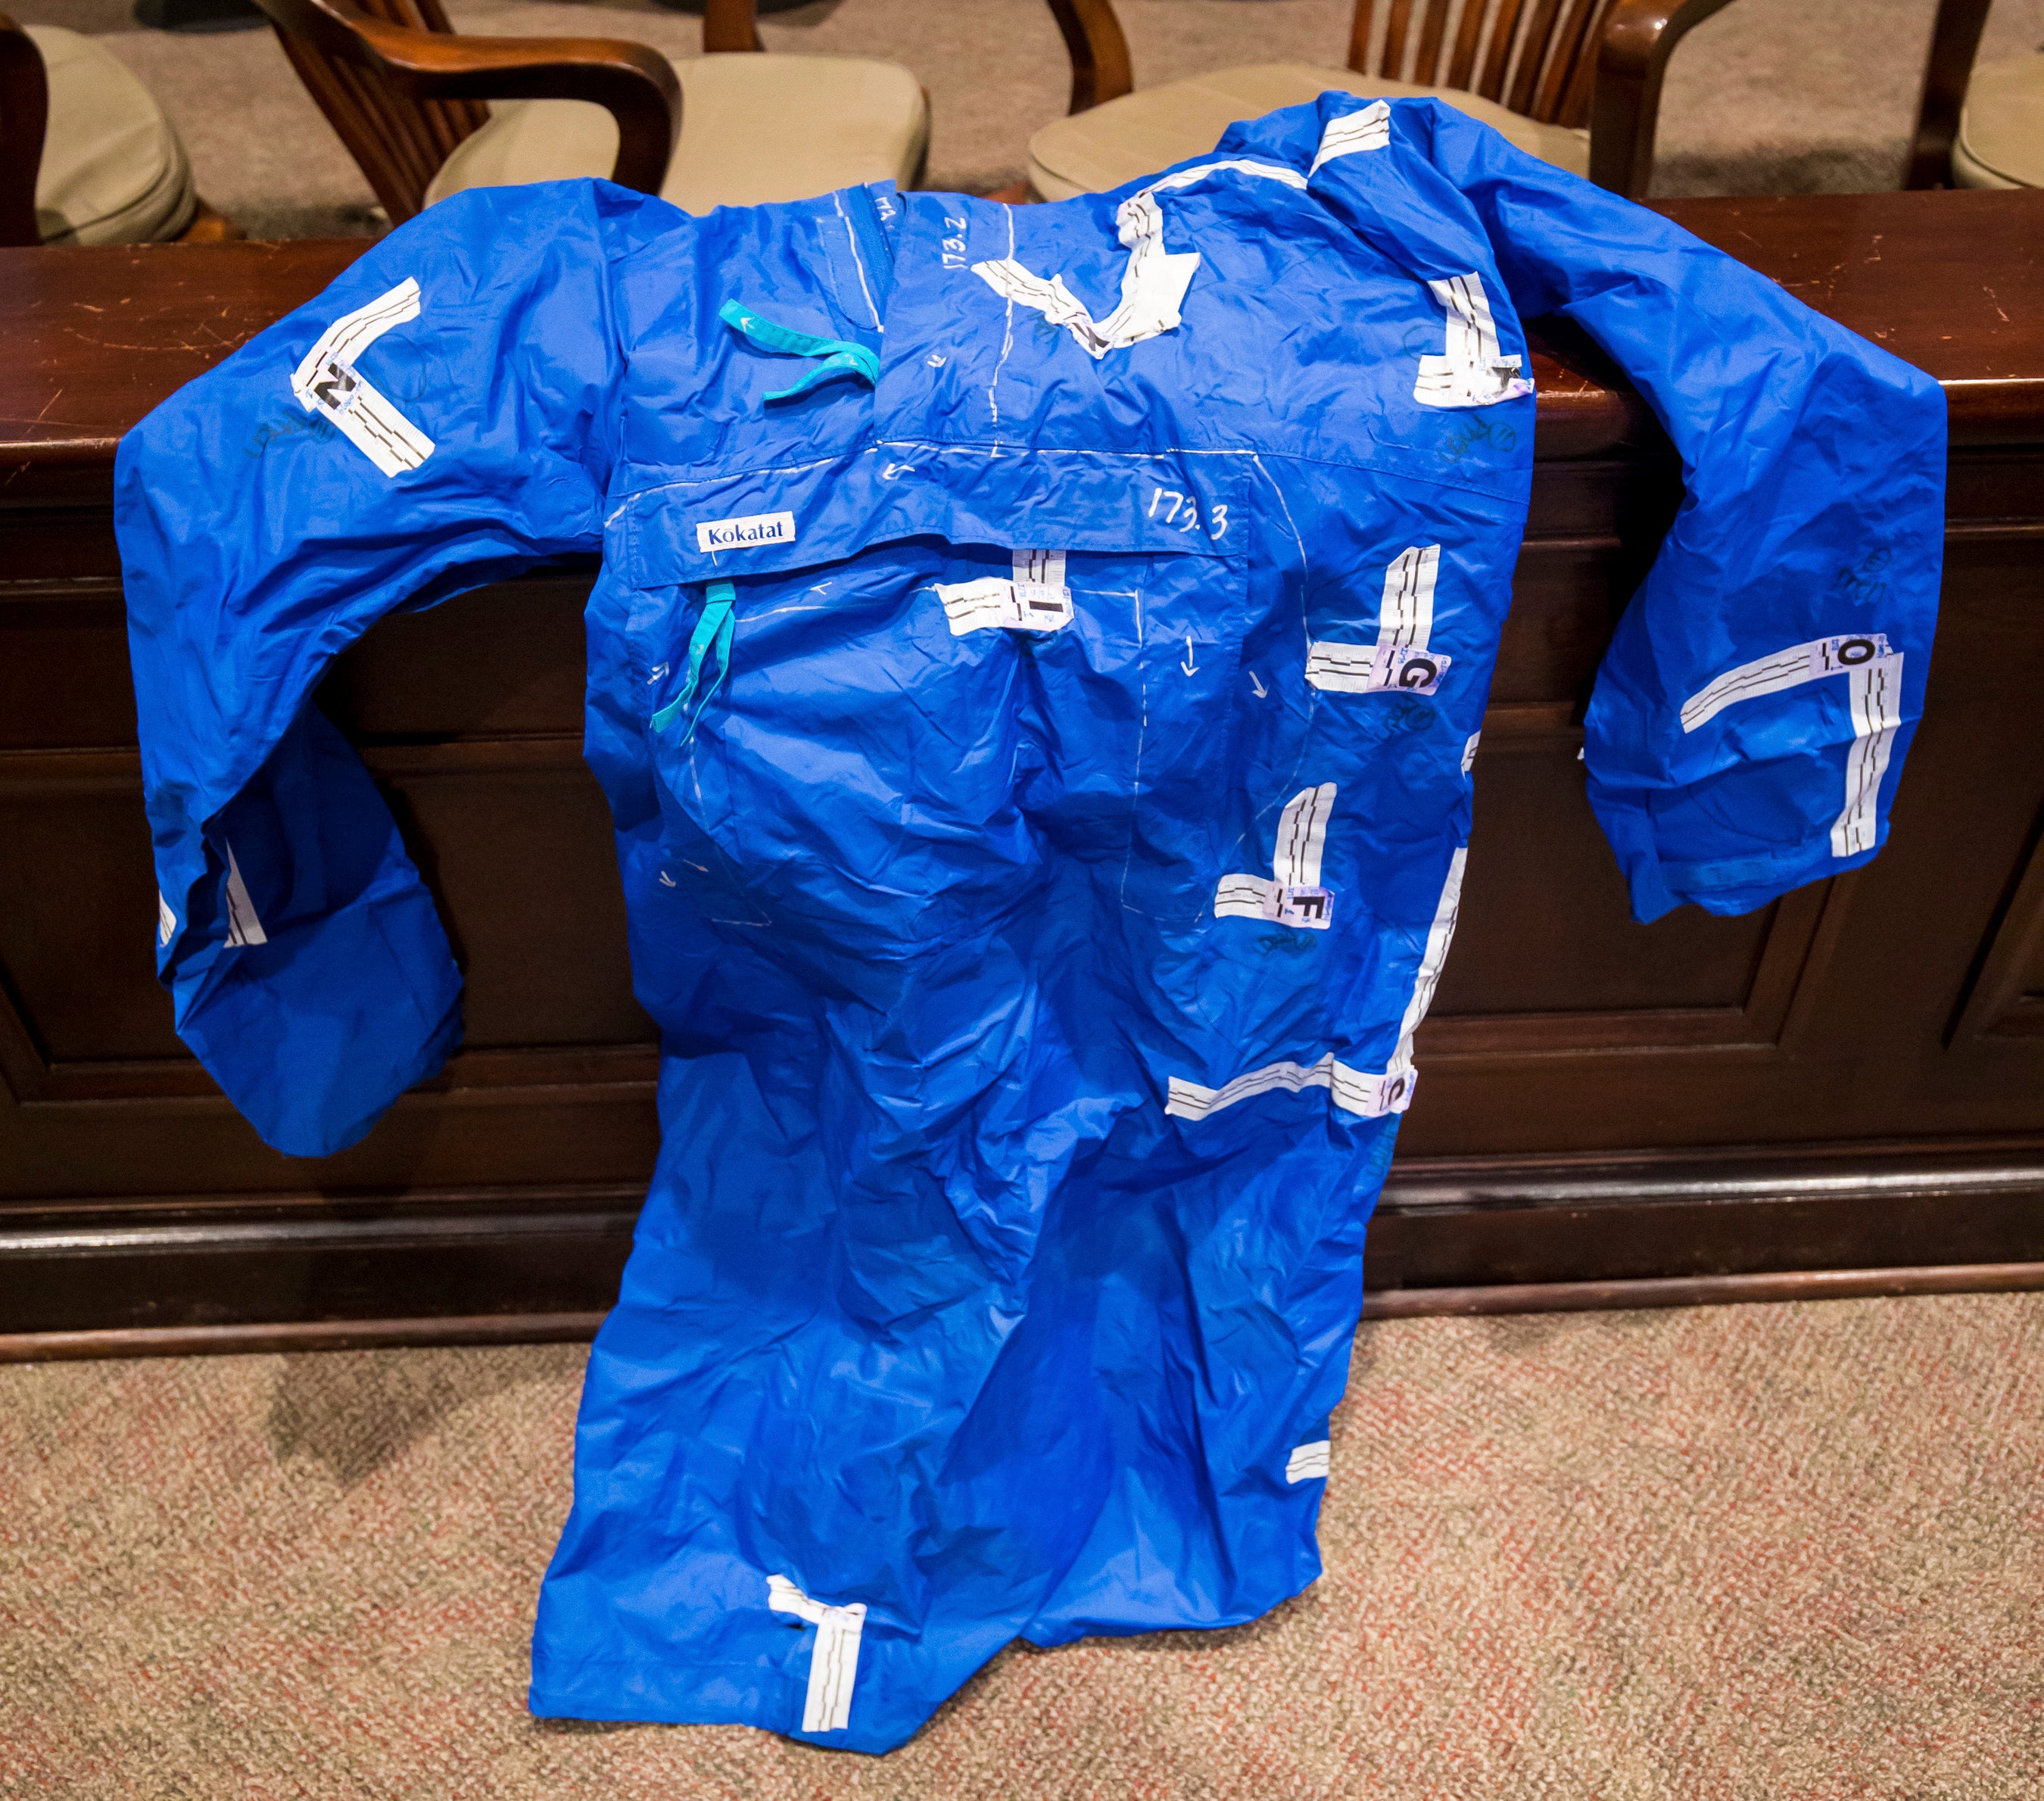 Blue raincoat shown in court